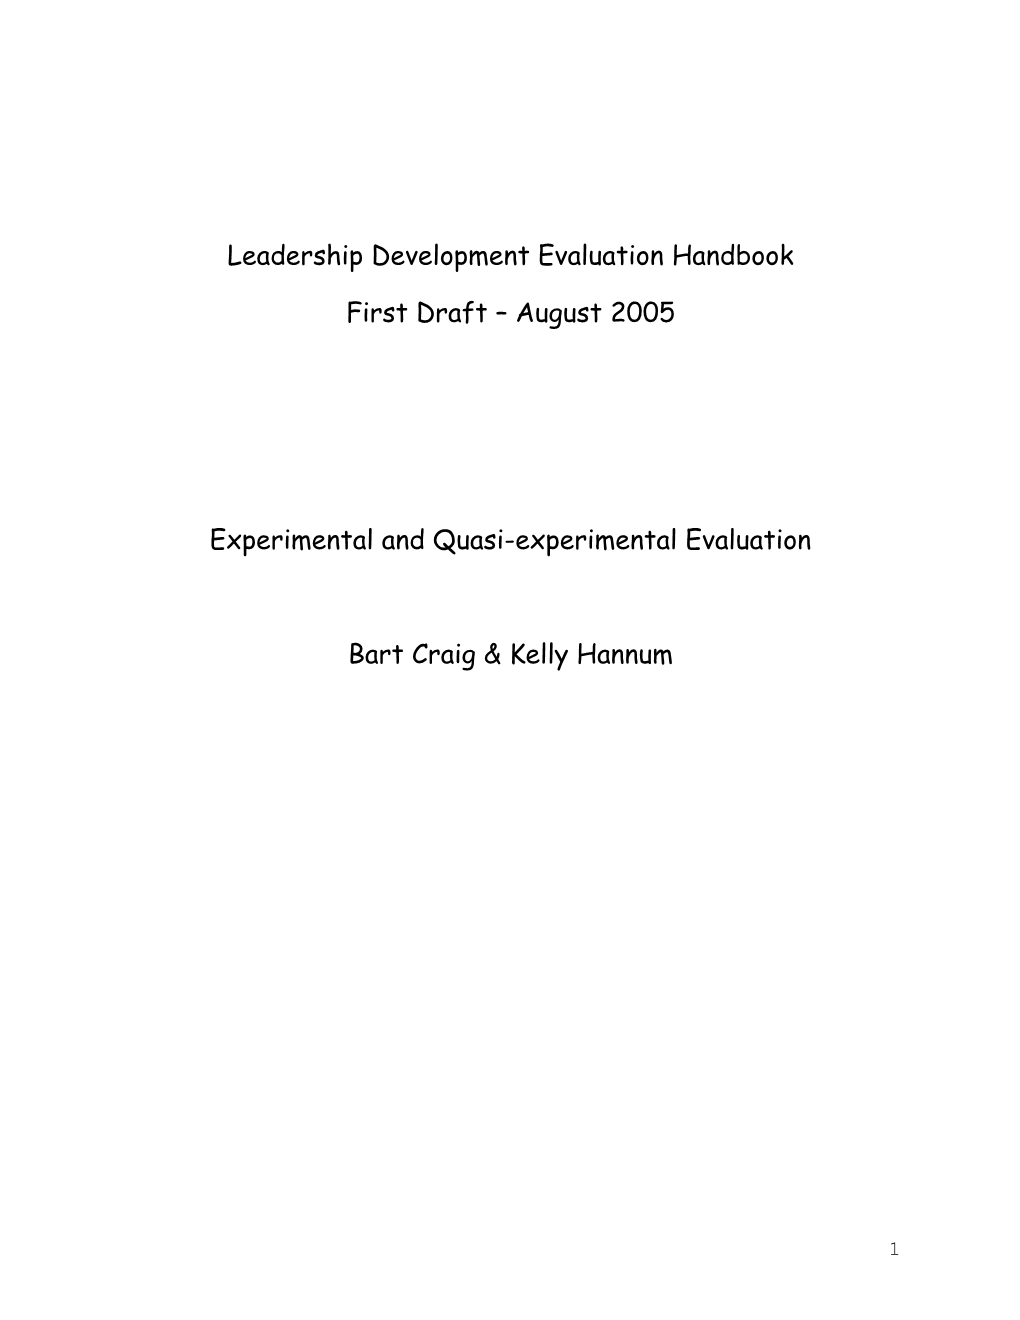 Experimental & Quasi-Experimental Evaluations